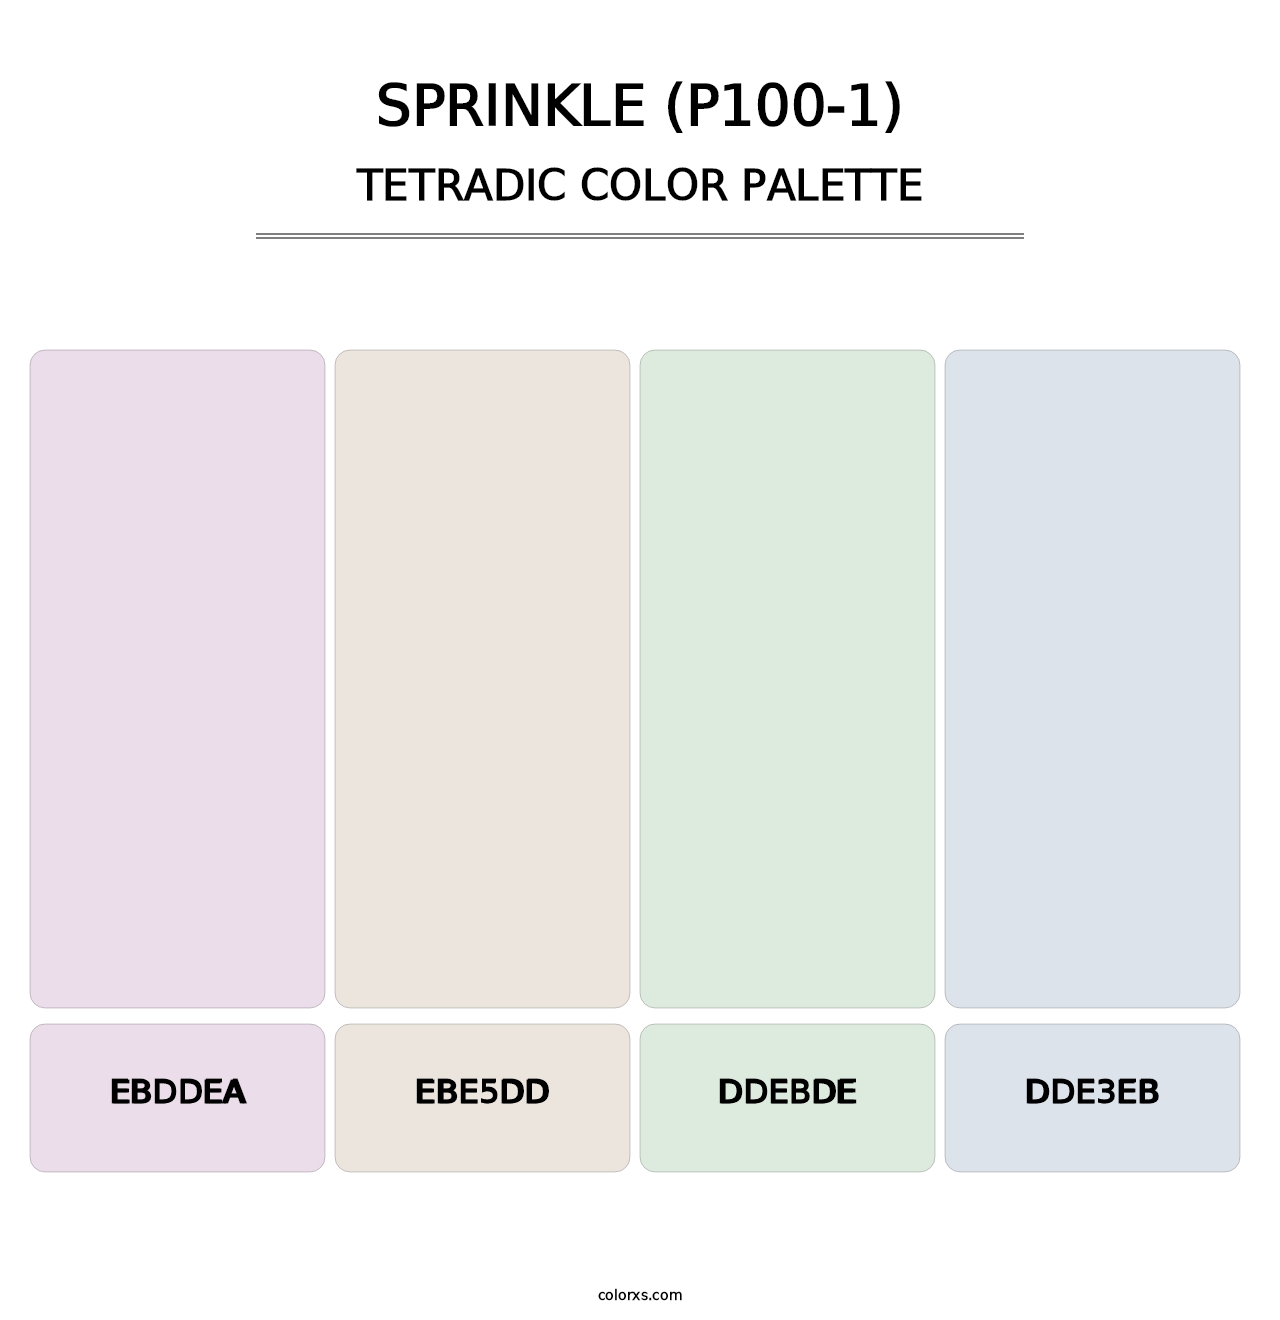 Sprinkle (P100-1) - Tetradic Color Palette